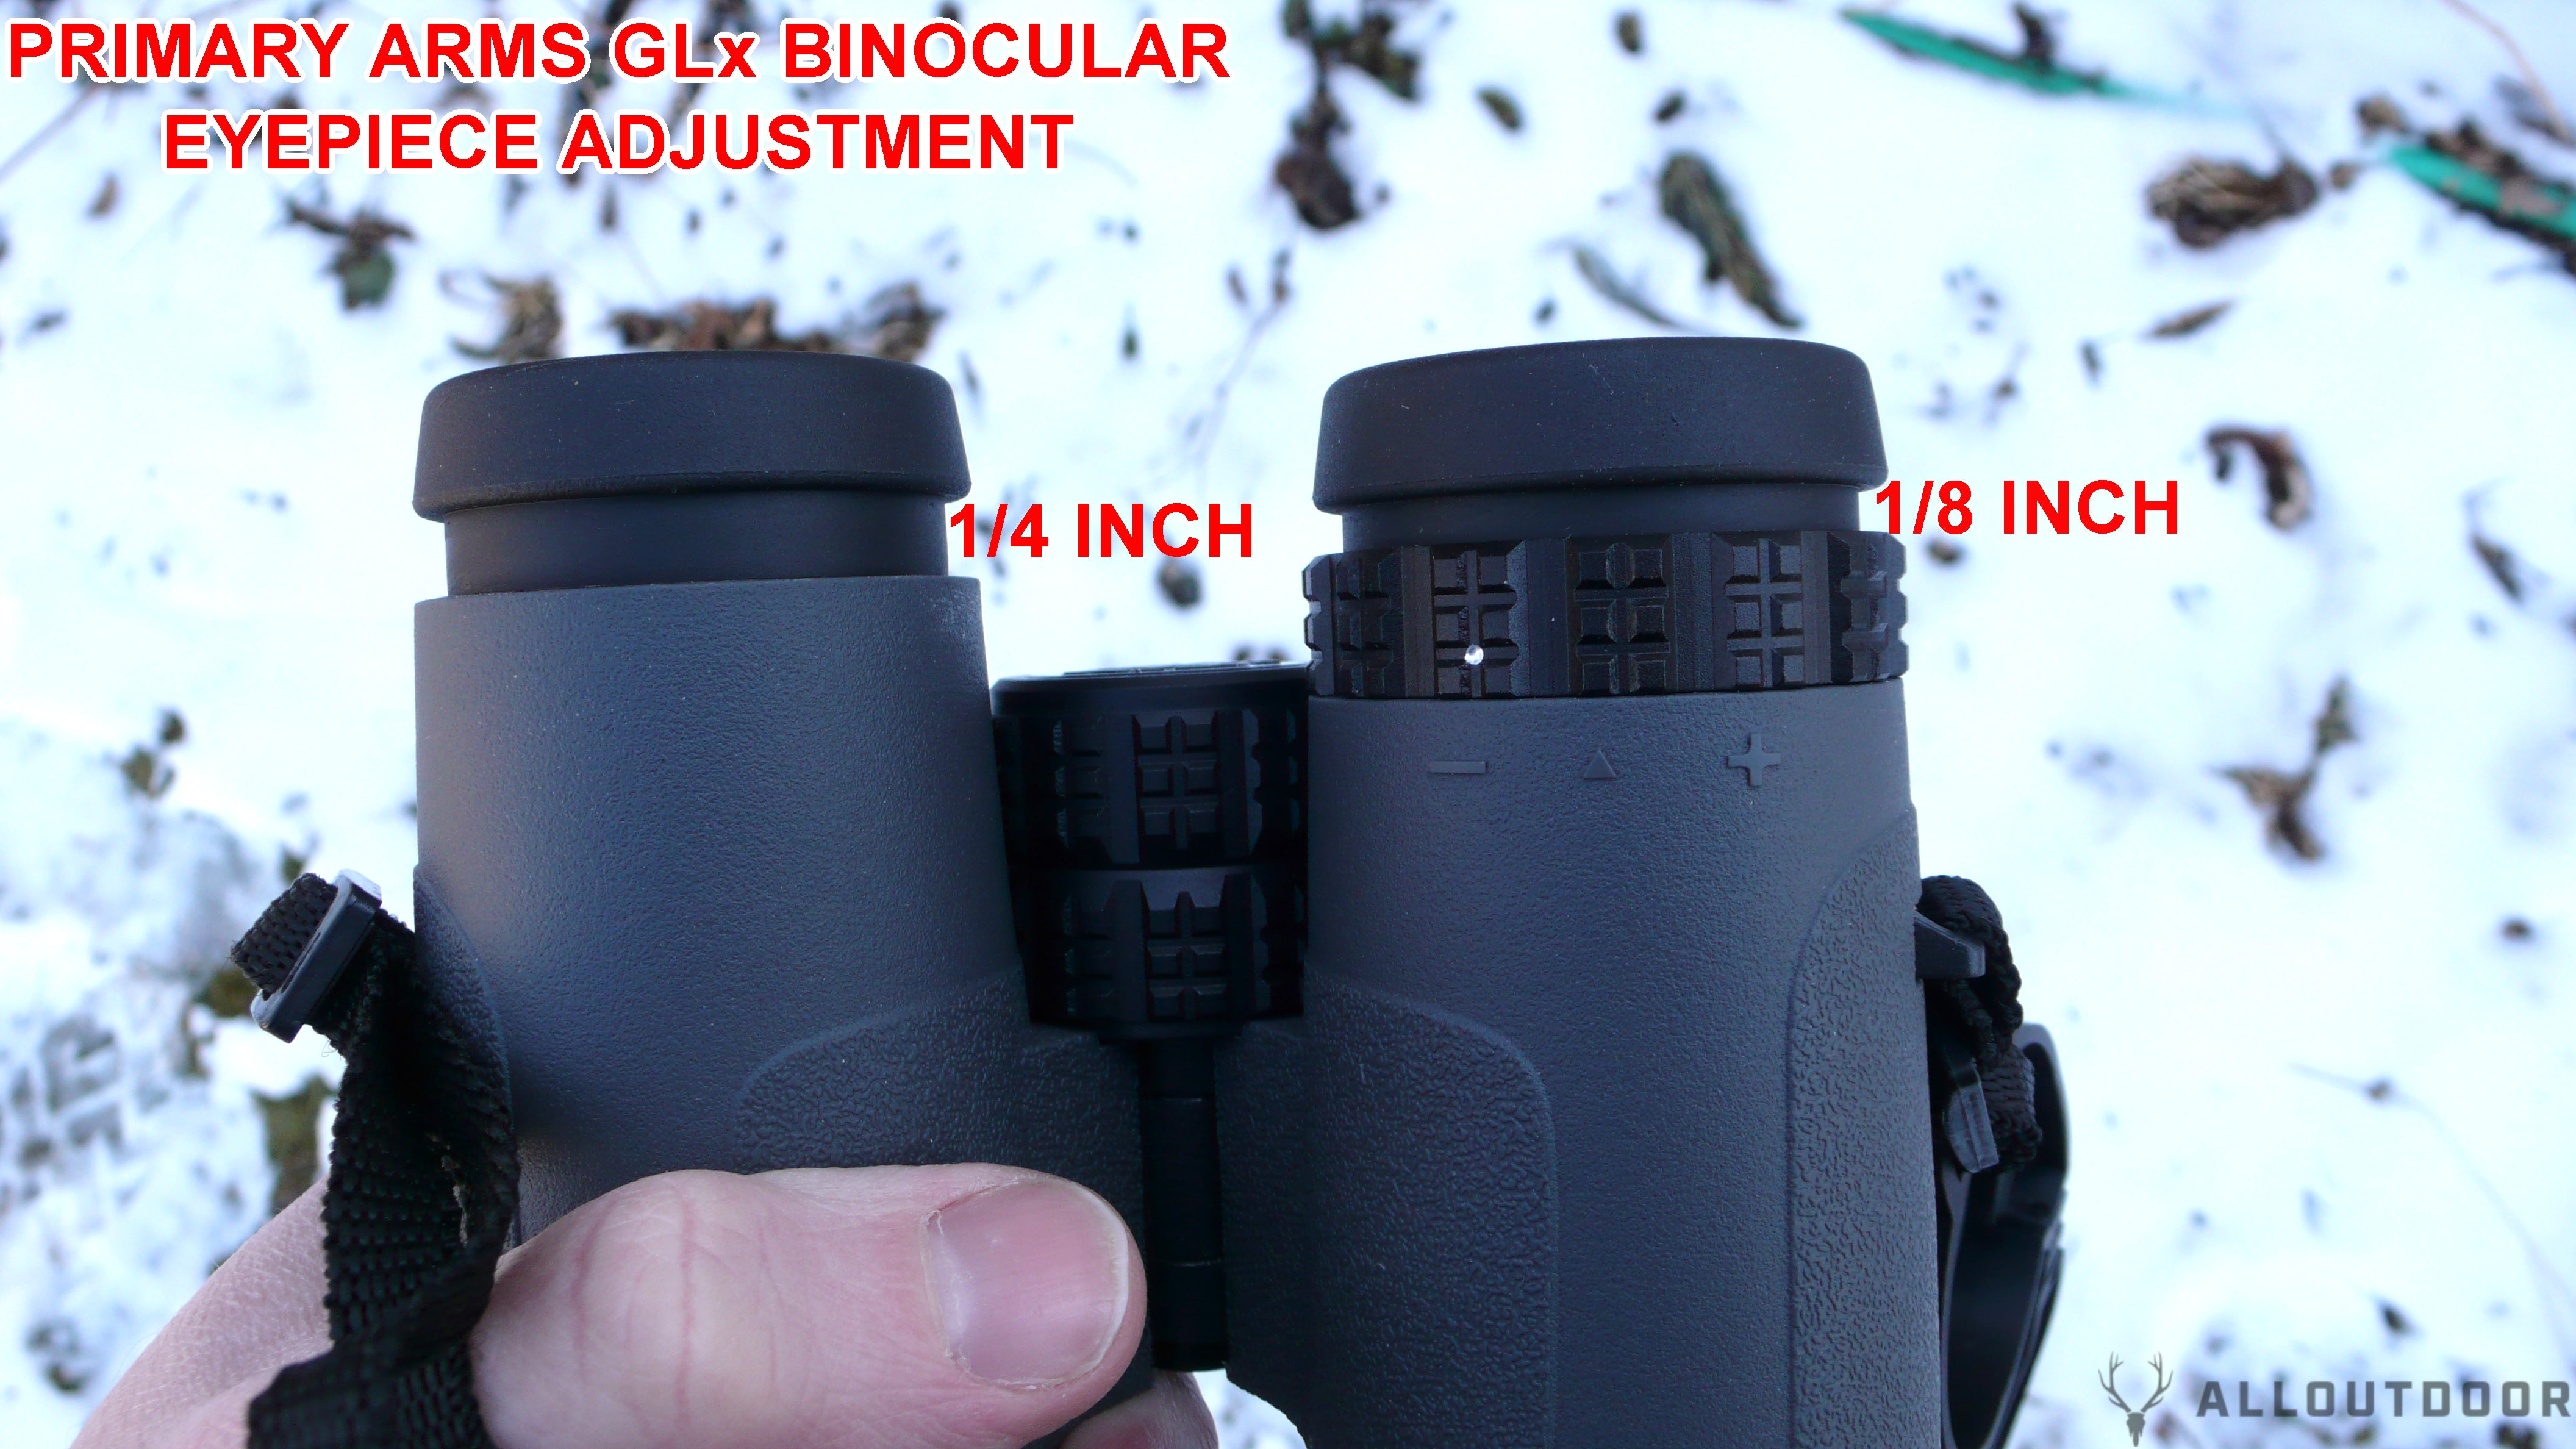 Primary Arms GLx Binocular Review